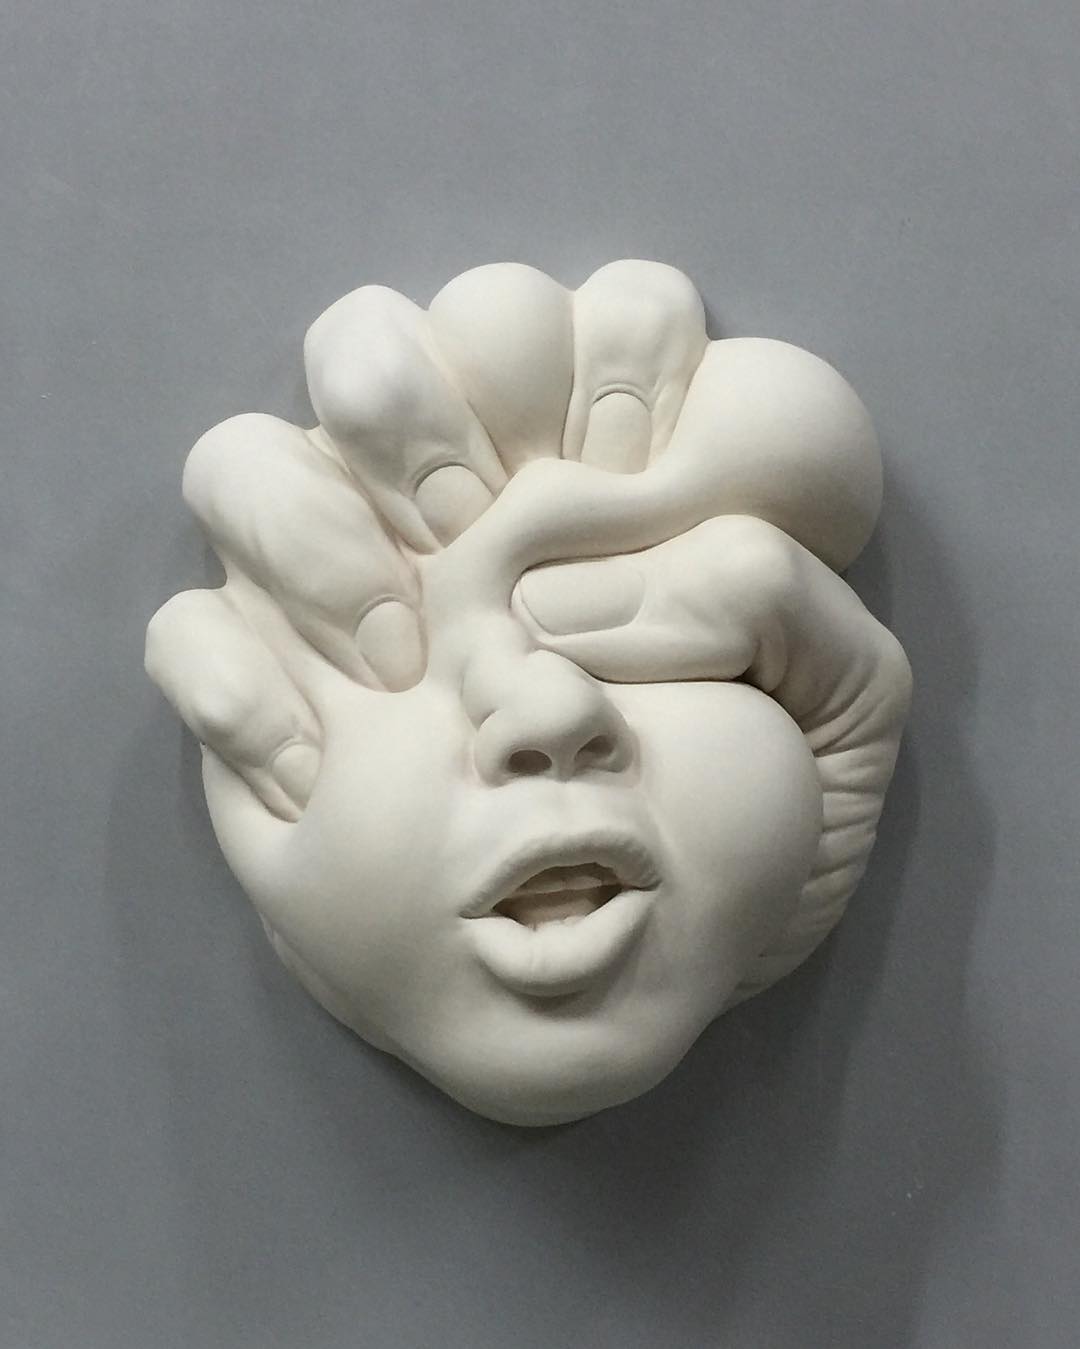 1 ceramic sculpture byjohnson tsang